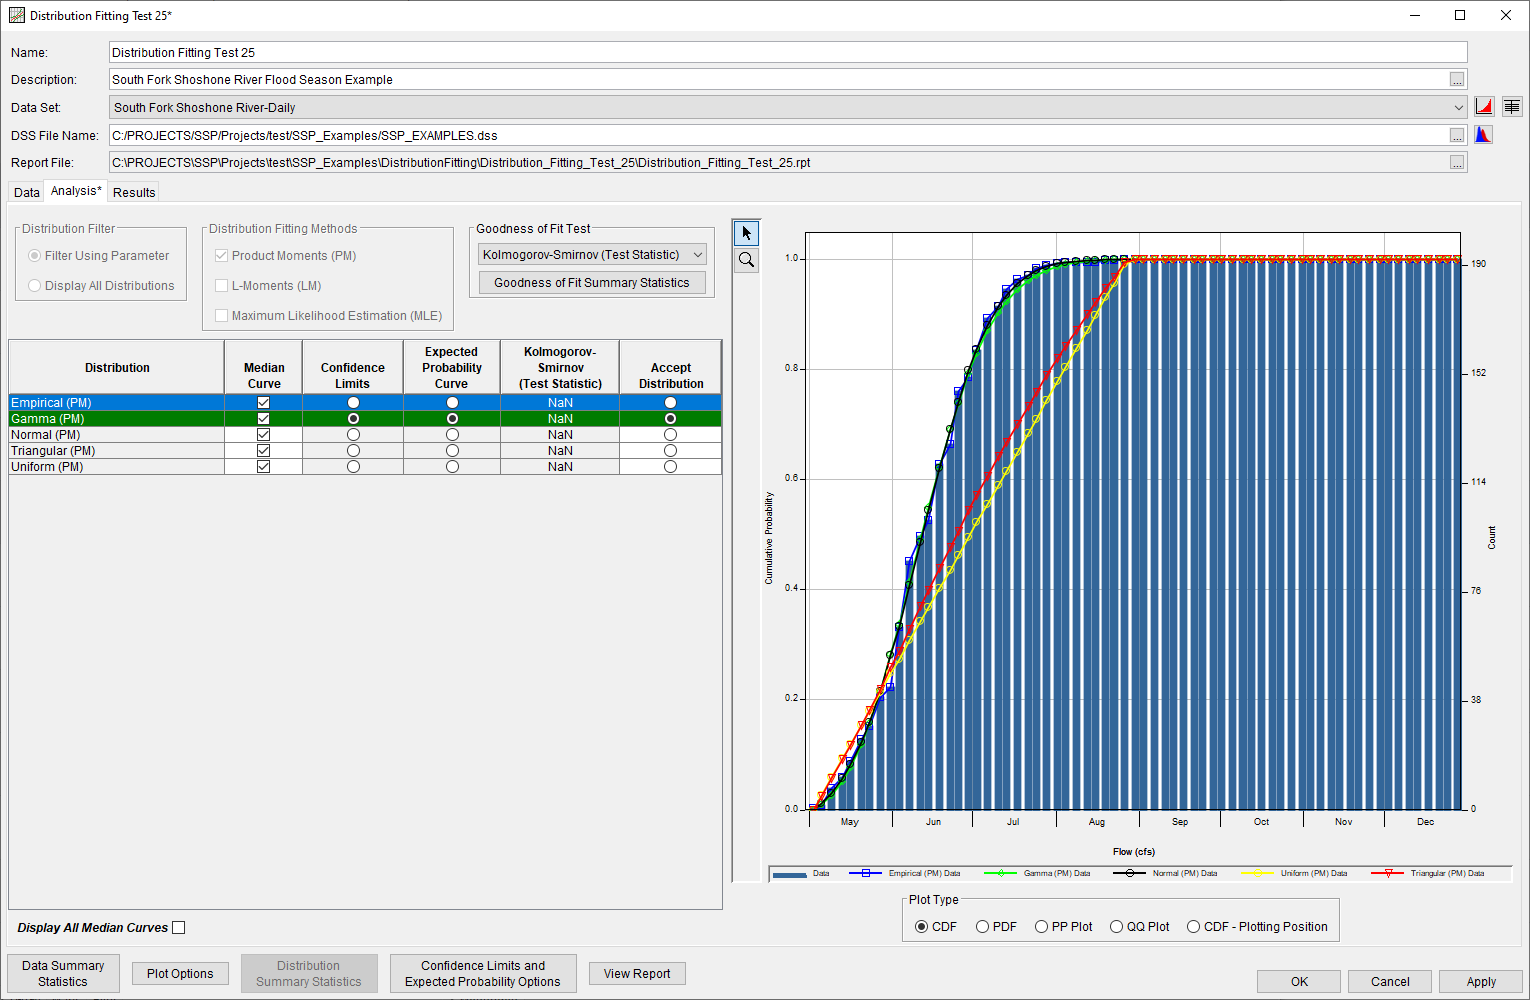 Figure 7. Distribution Fitting Analysis Editor with Analysis Tab Shown for Distribution Fitting Test 25.